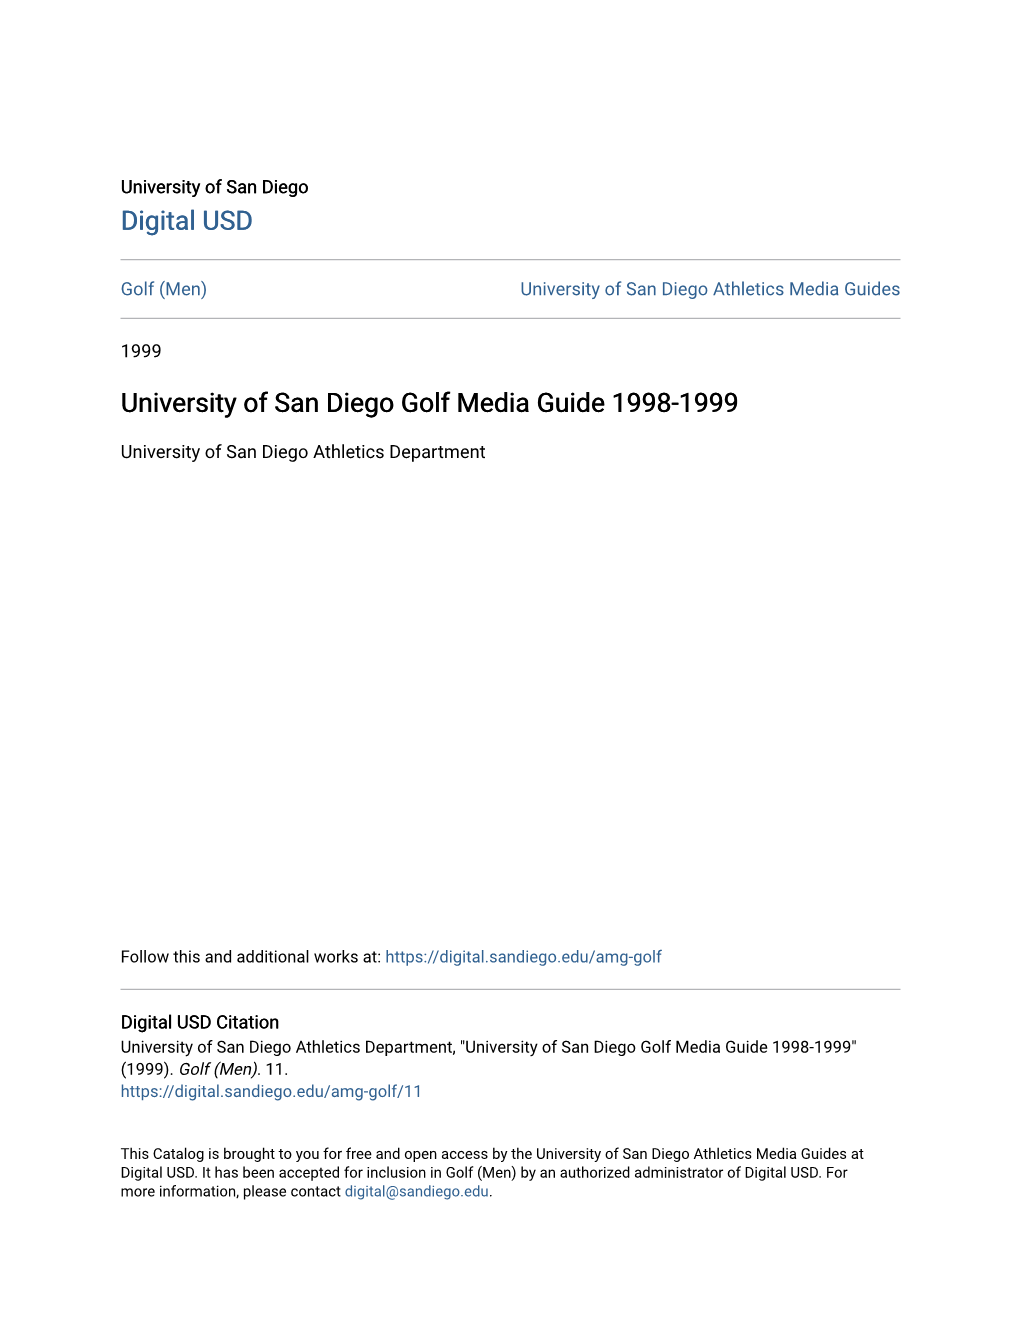 University of San Diego Golf Media Guide 1998-1999